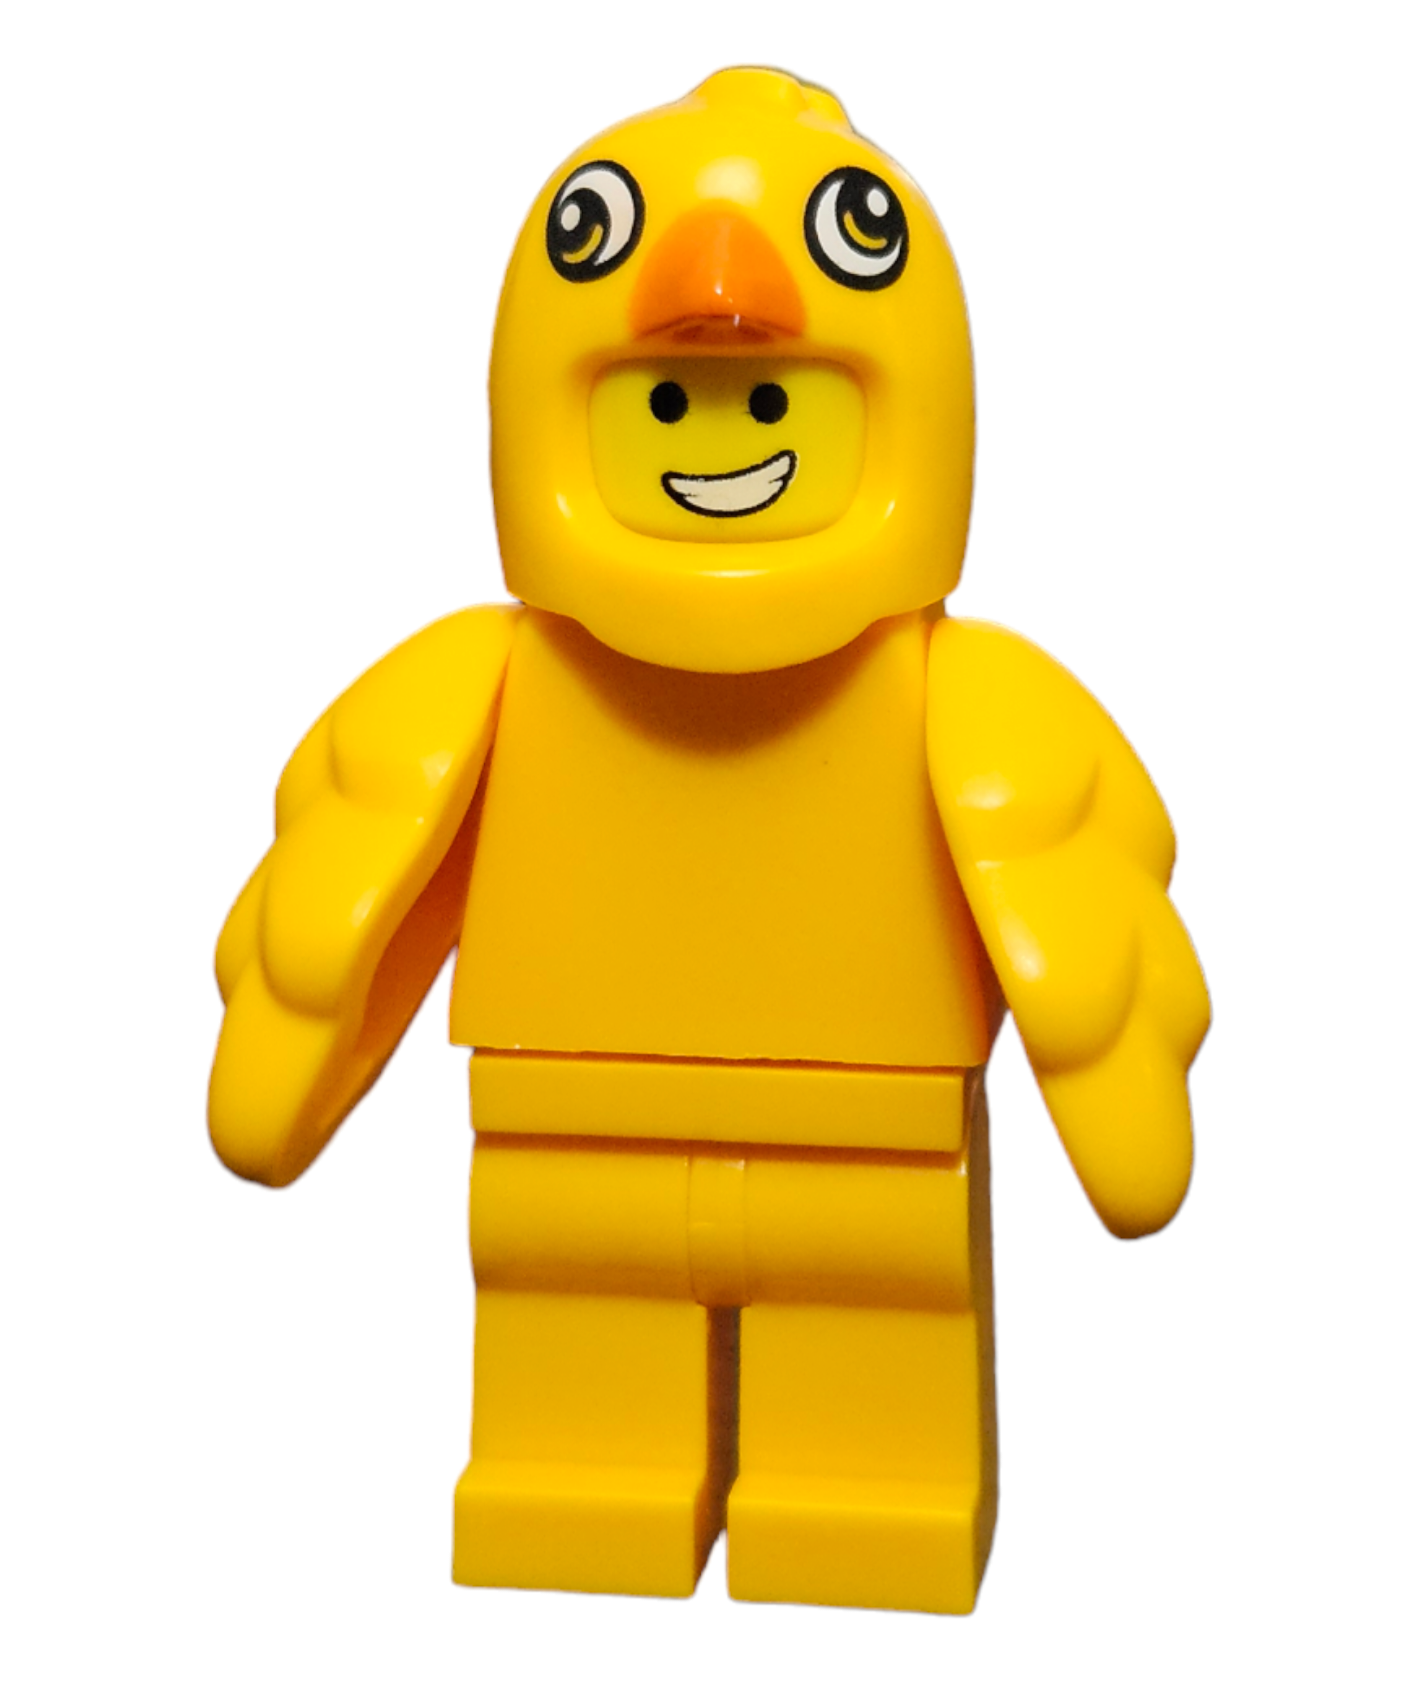 Chicken costume Lego minifigure Media 1 of 1